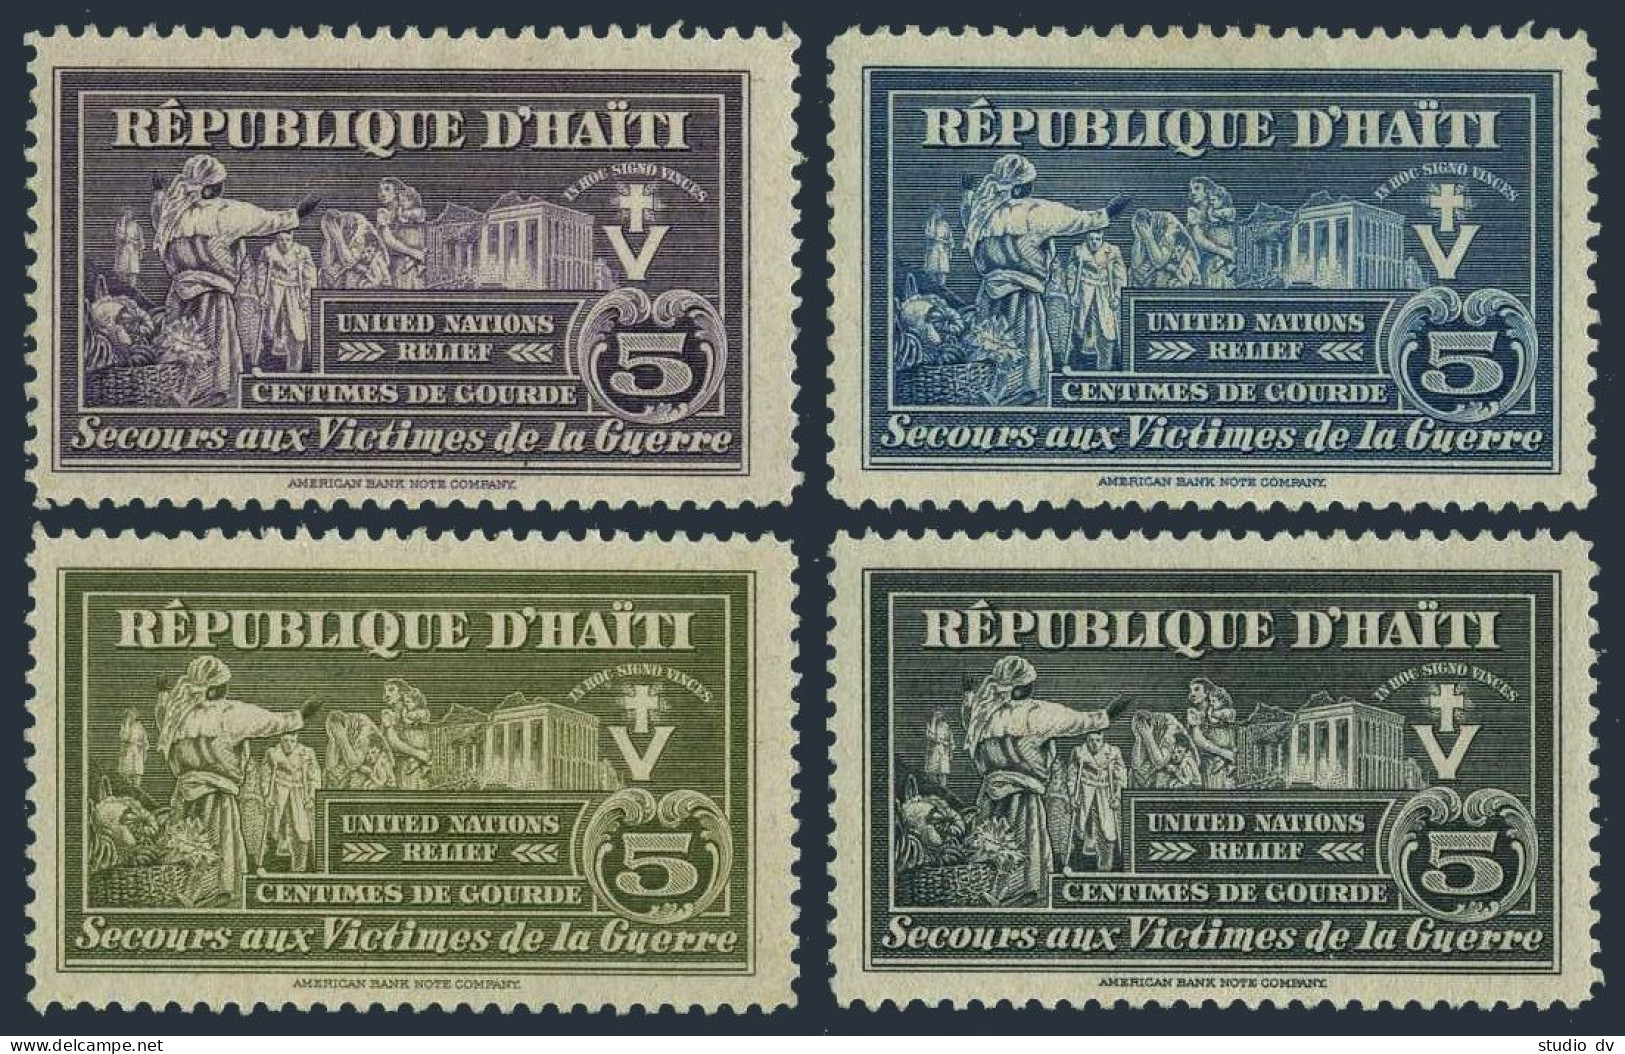 Haiti RA1-RA4,MNH, Hinged. Michel Zw 1-4. Postal Tax Stamps 1944. UN Relief. - Haiti